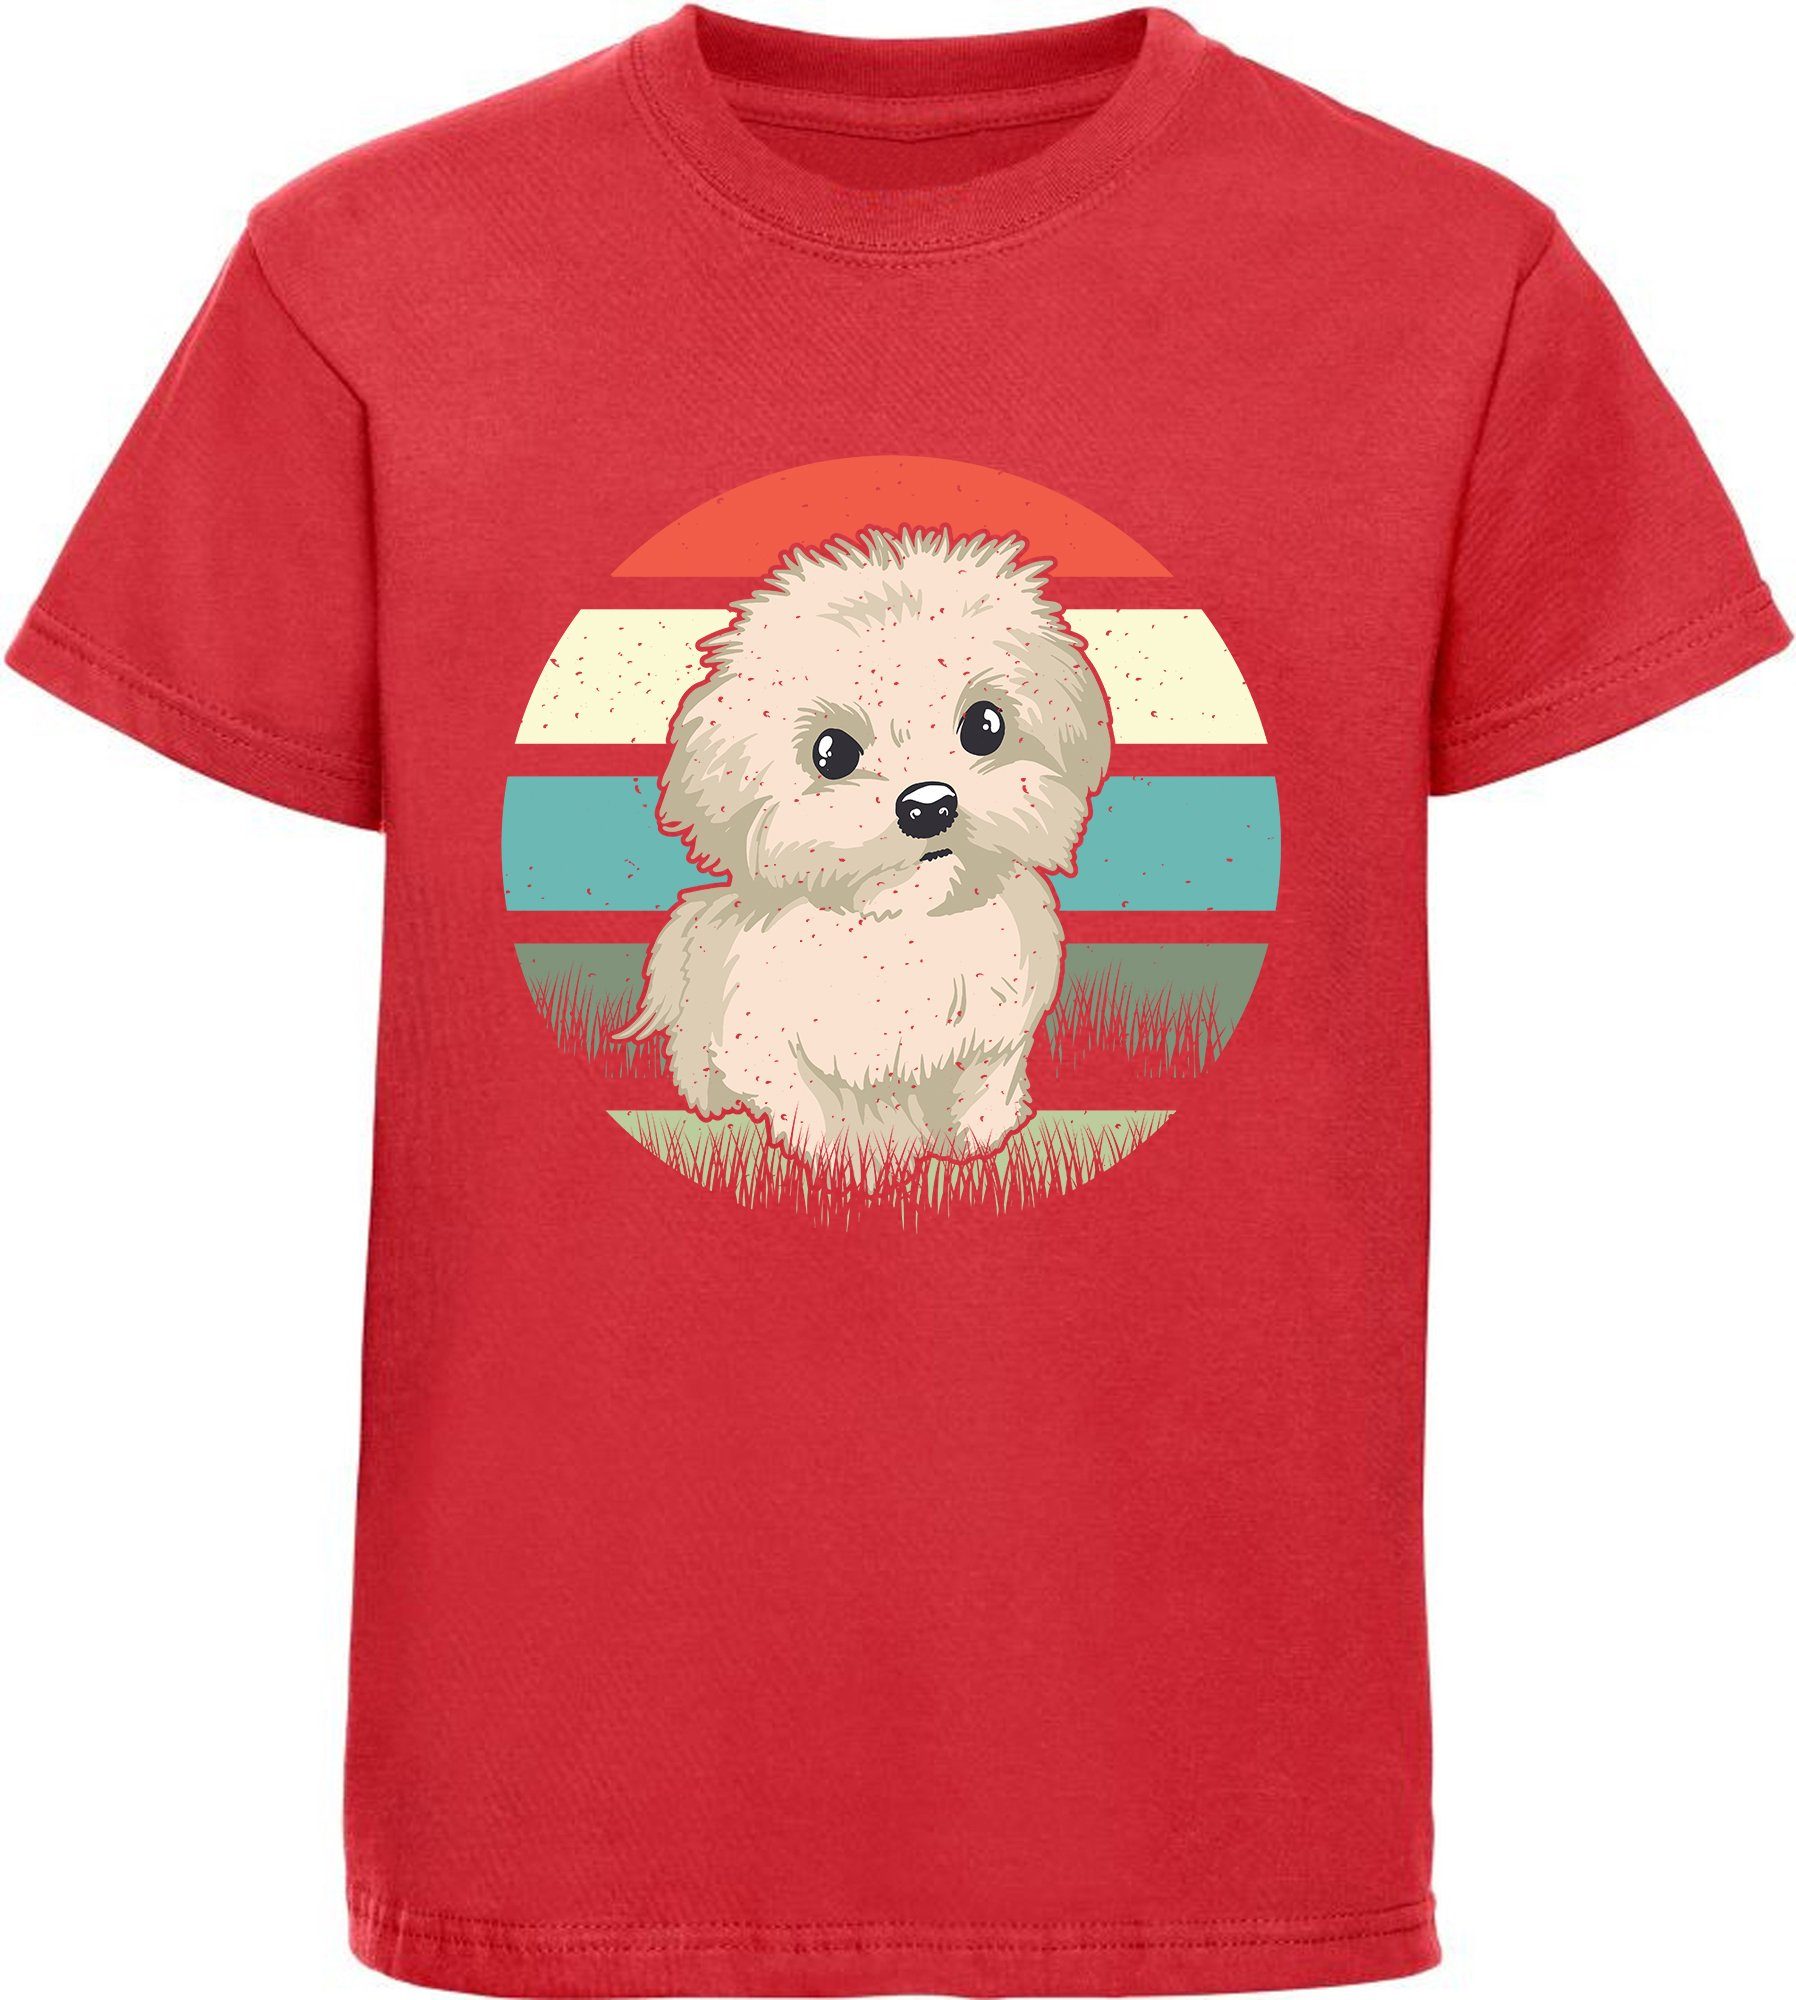 Weltweit sehr beliebt MyDesign24 Print-Shirt Kinder Hunde T-Shirt Welpen Malteser - bedruckt rot i242 Retro mit Baumwollshirt Aufdruck